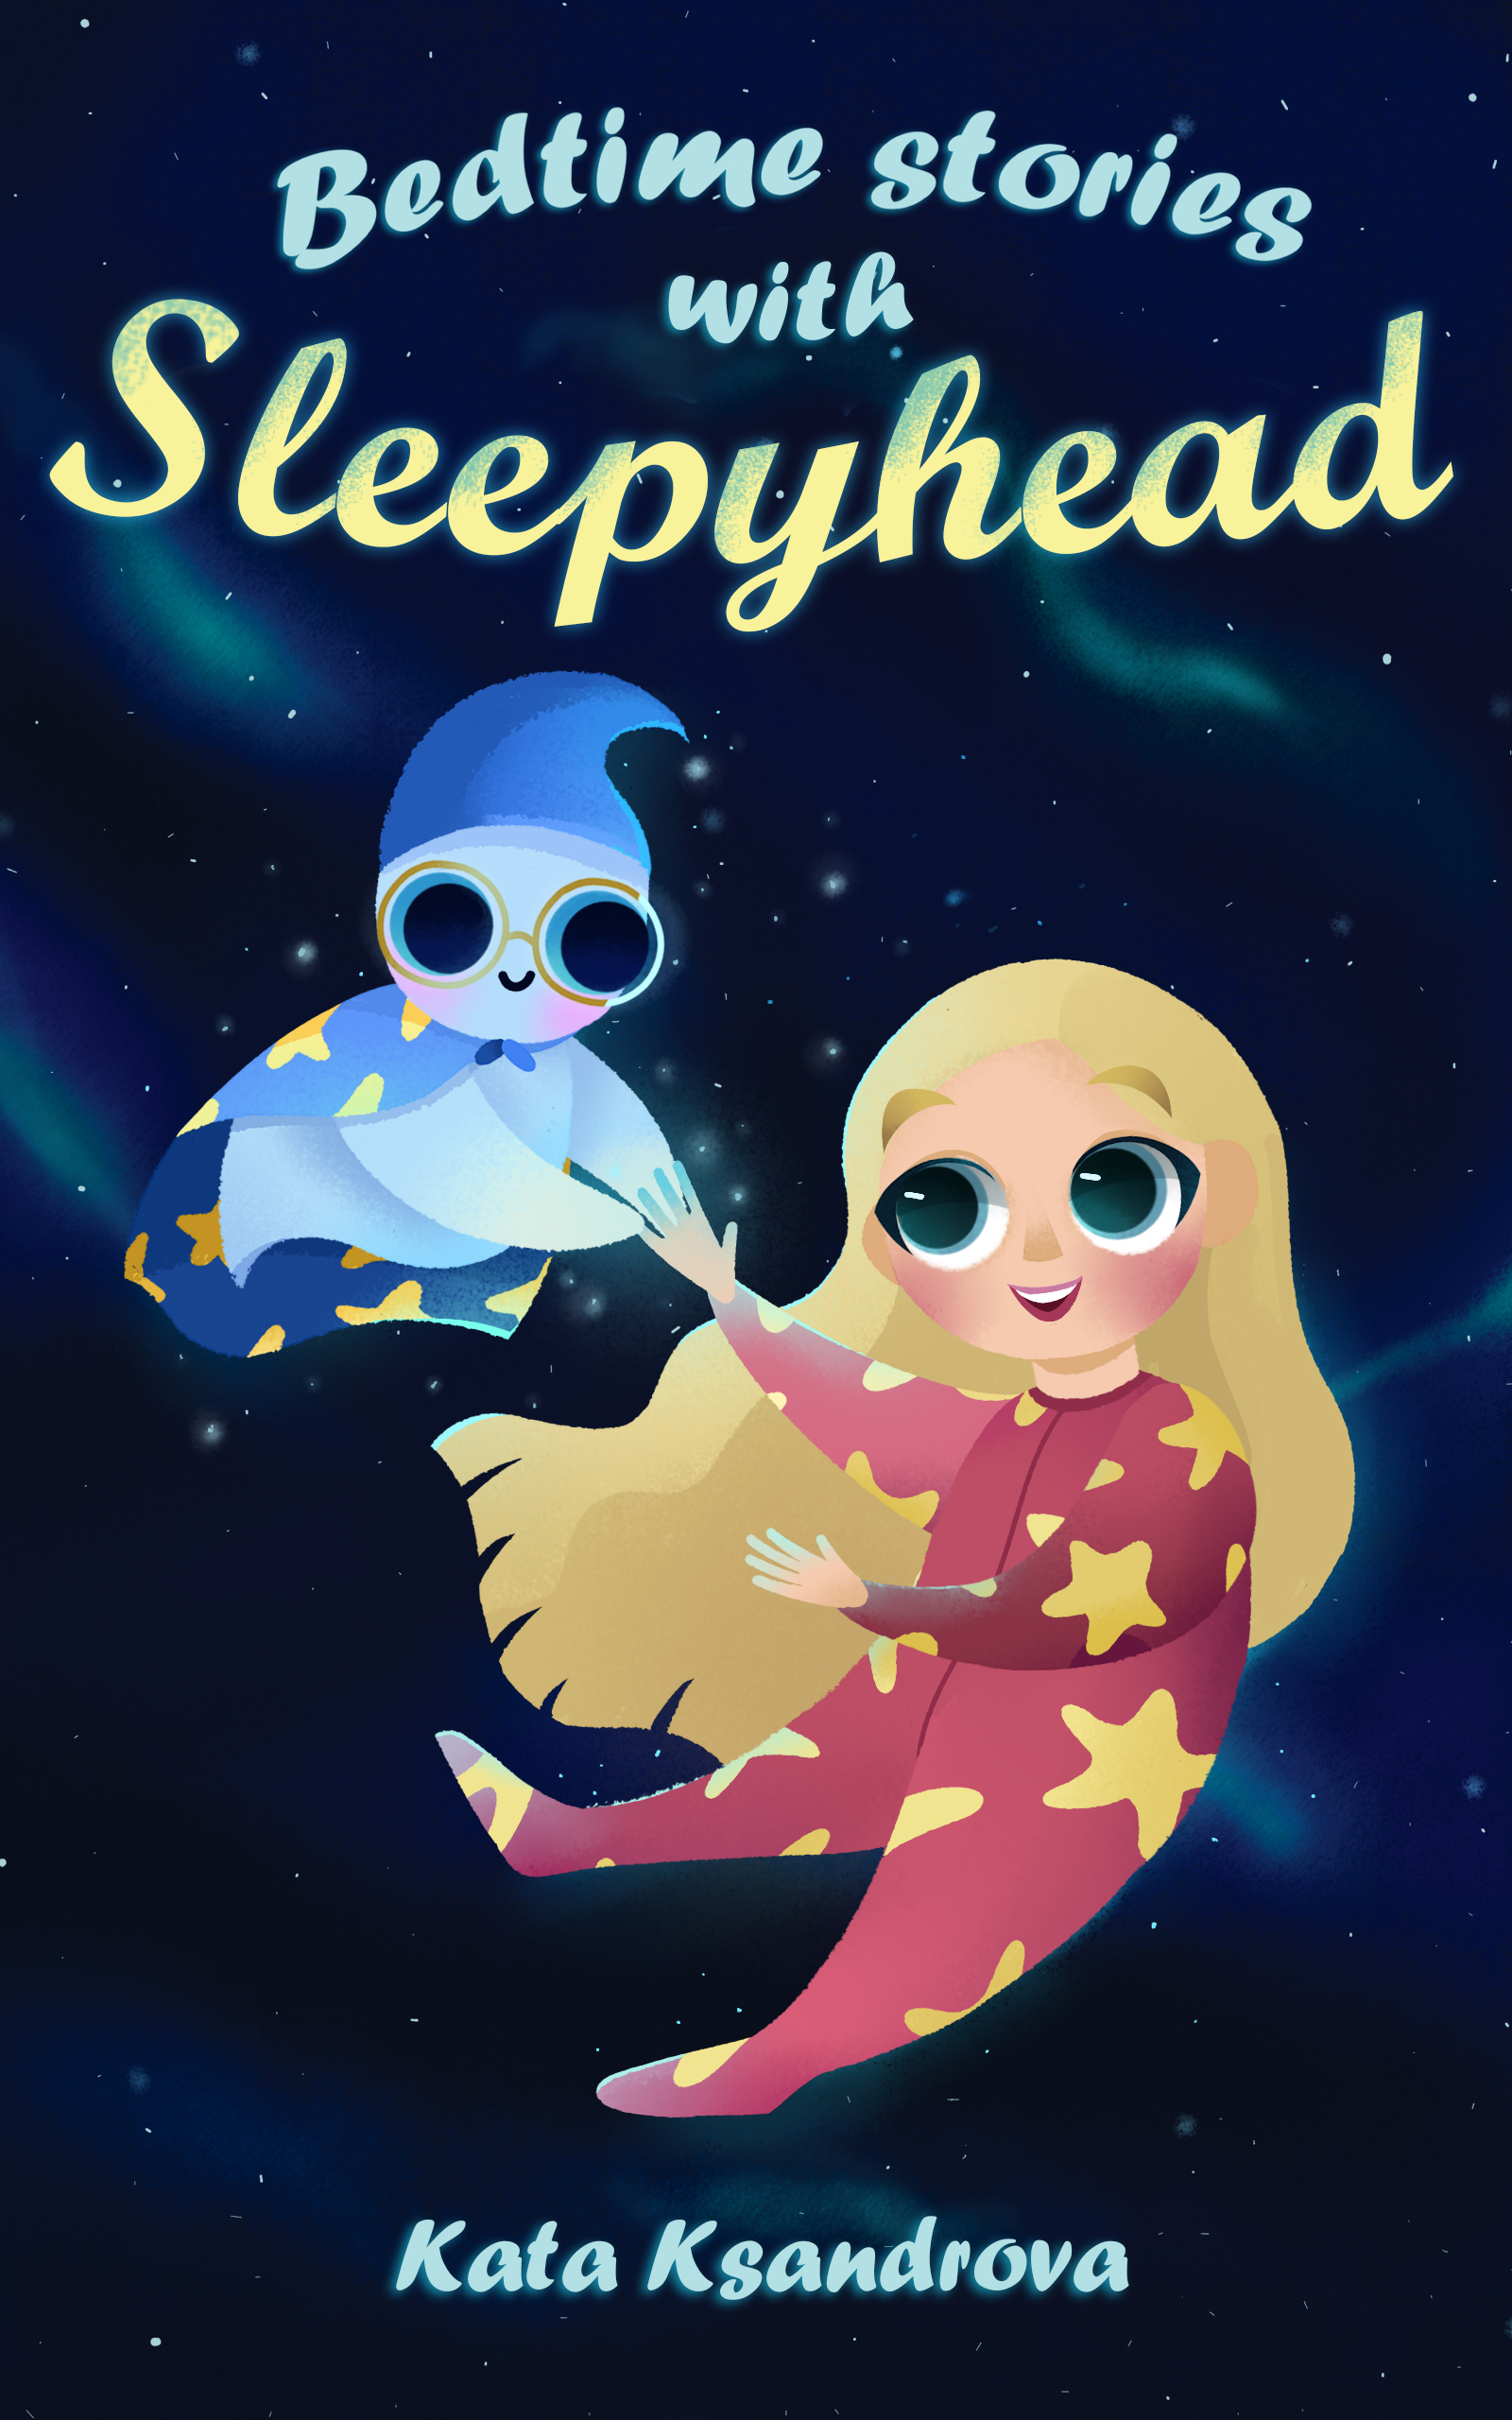 FREE: Bedtime stories with Sleepyhead by Kata Ksandrova